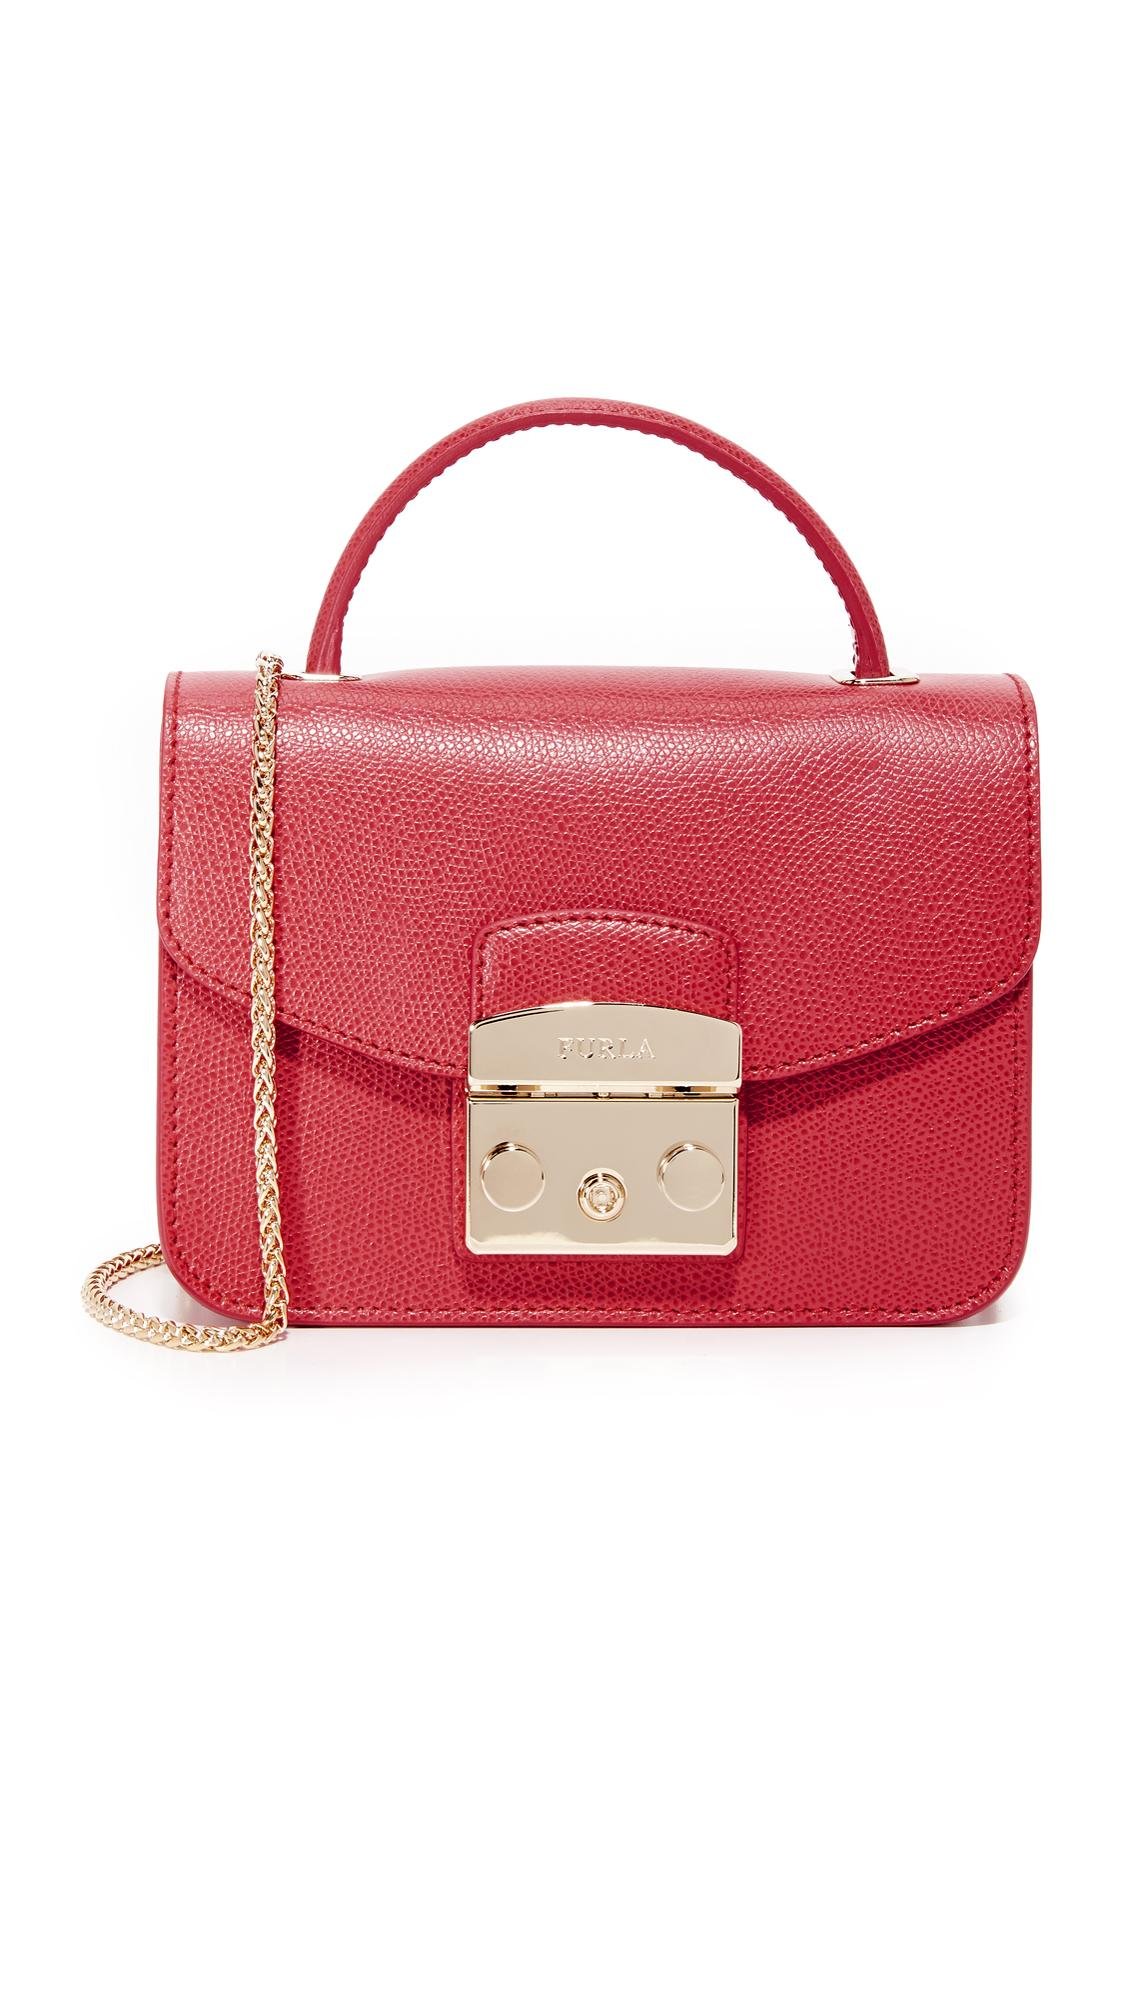 Furla Leather Metropolis Mini Top Handle Bag in Ruby (Red) - Lyst